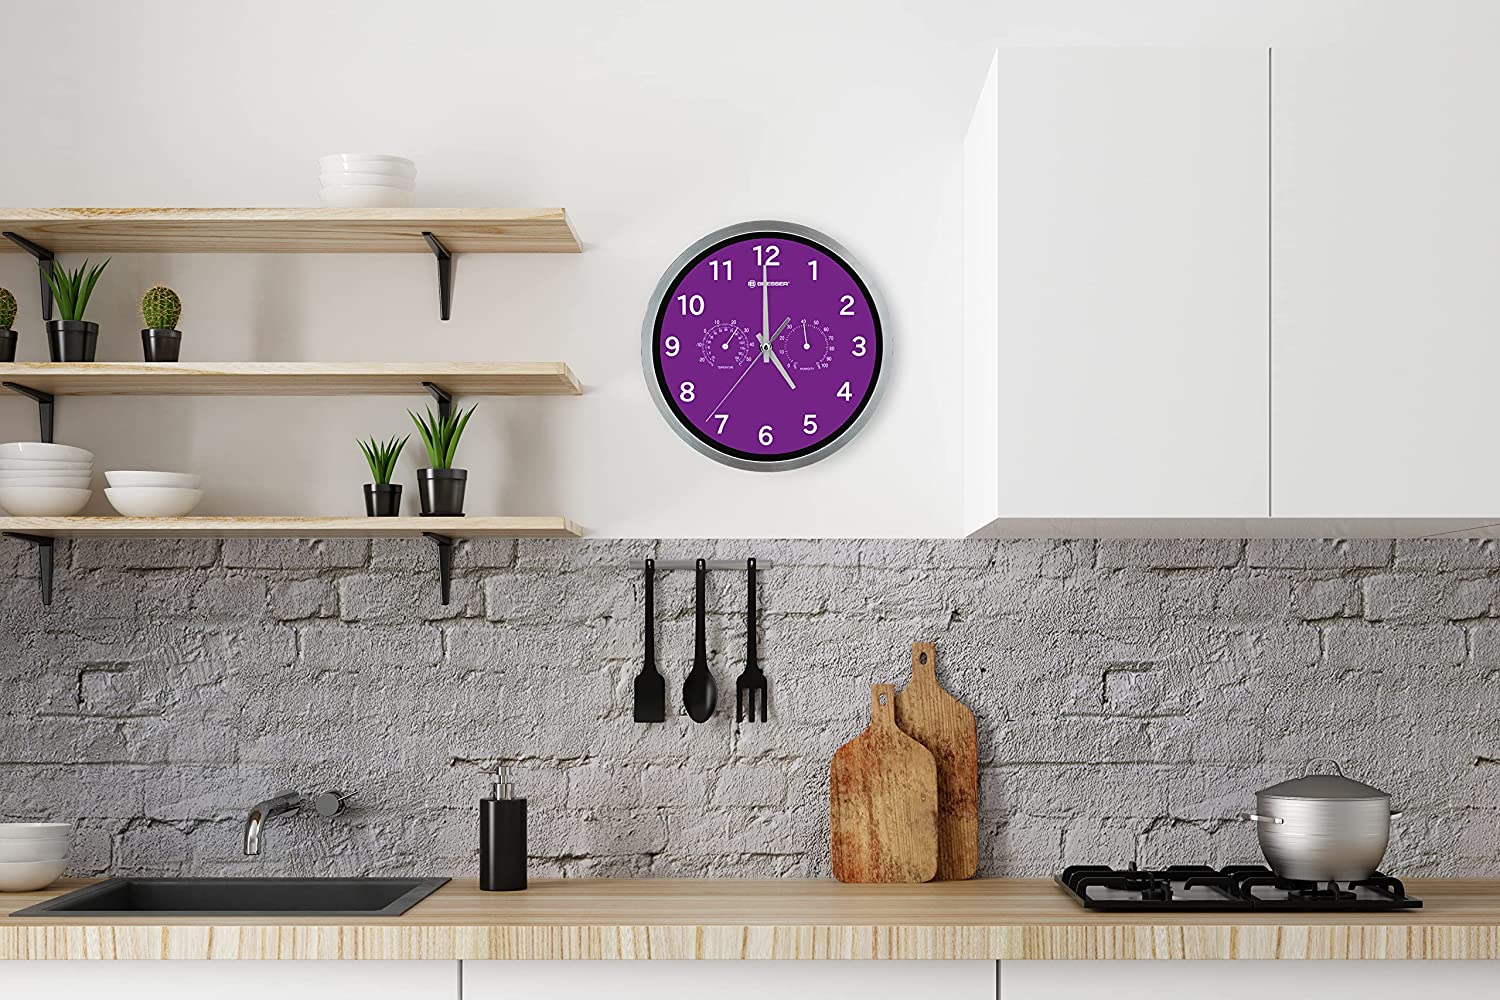 Reloj de Baño BRESSER MyTime Termo/Higro - gris